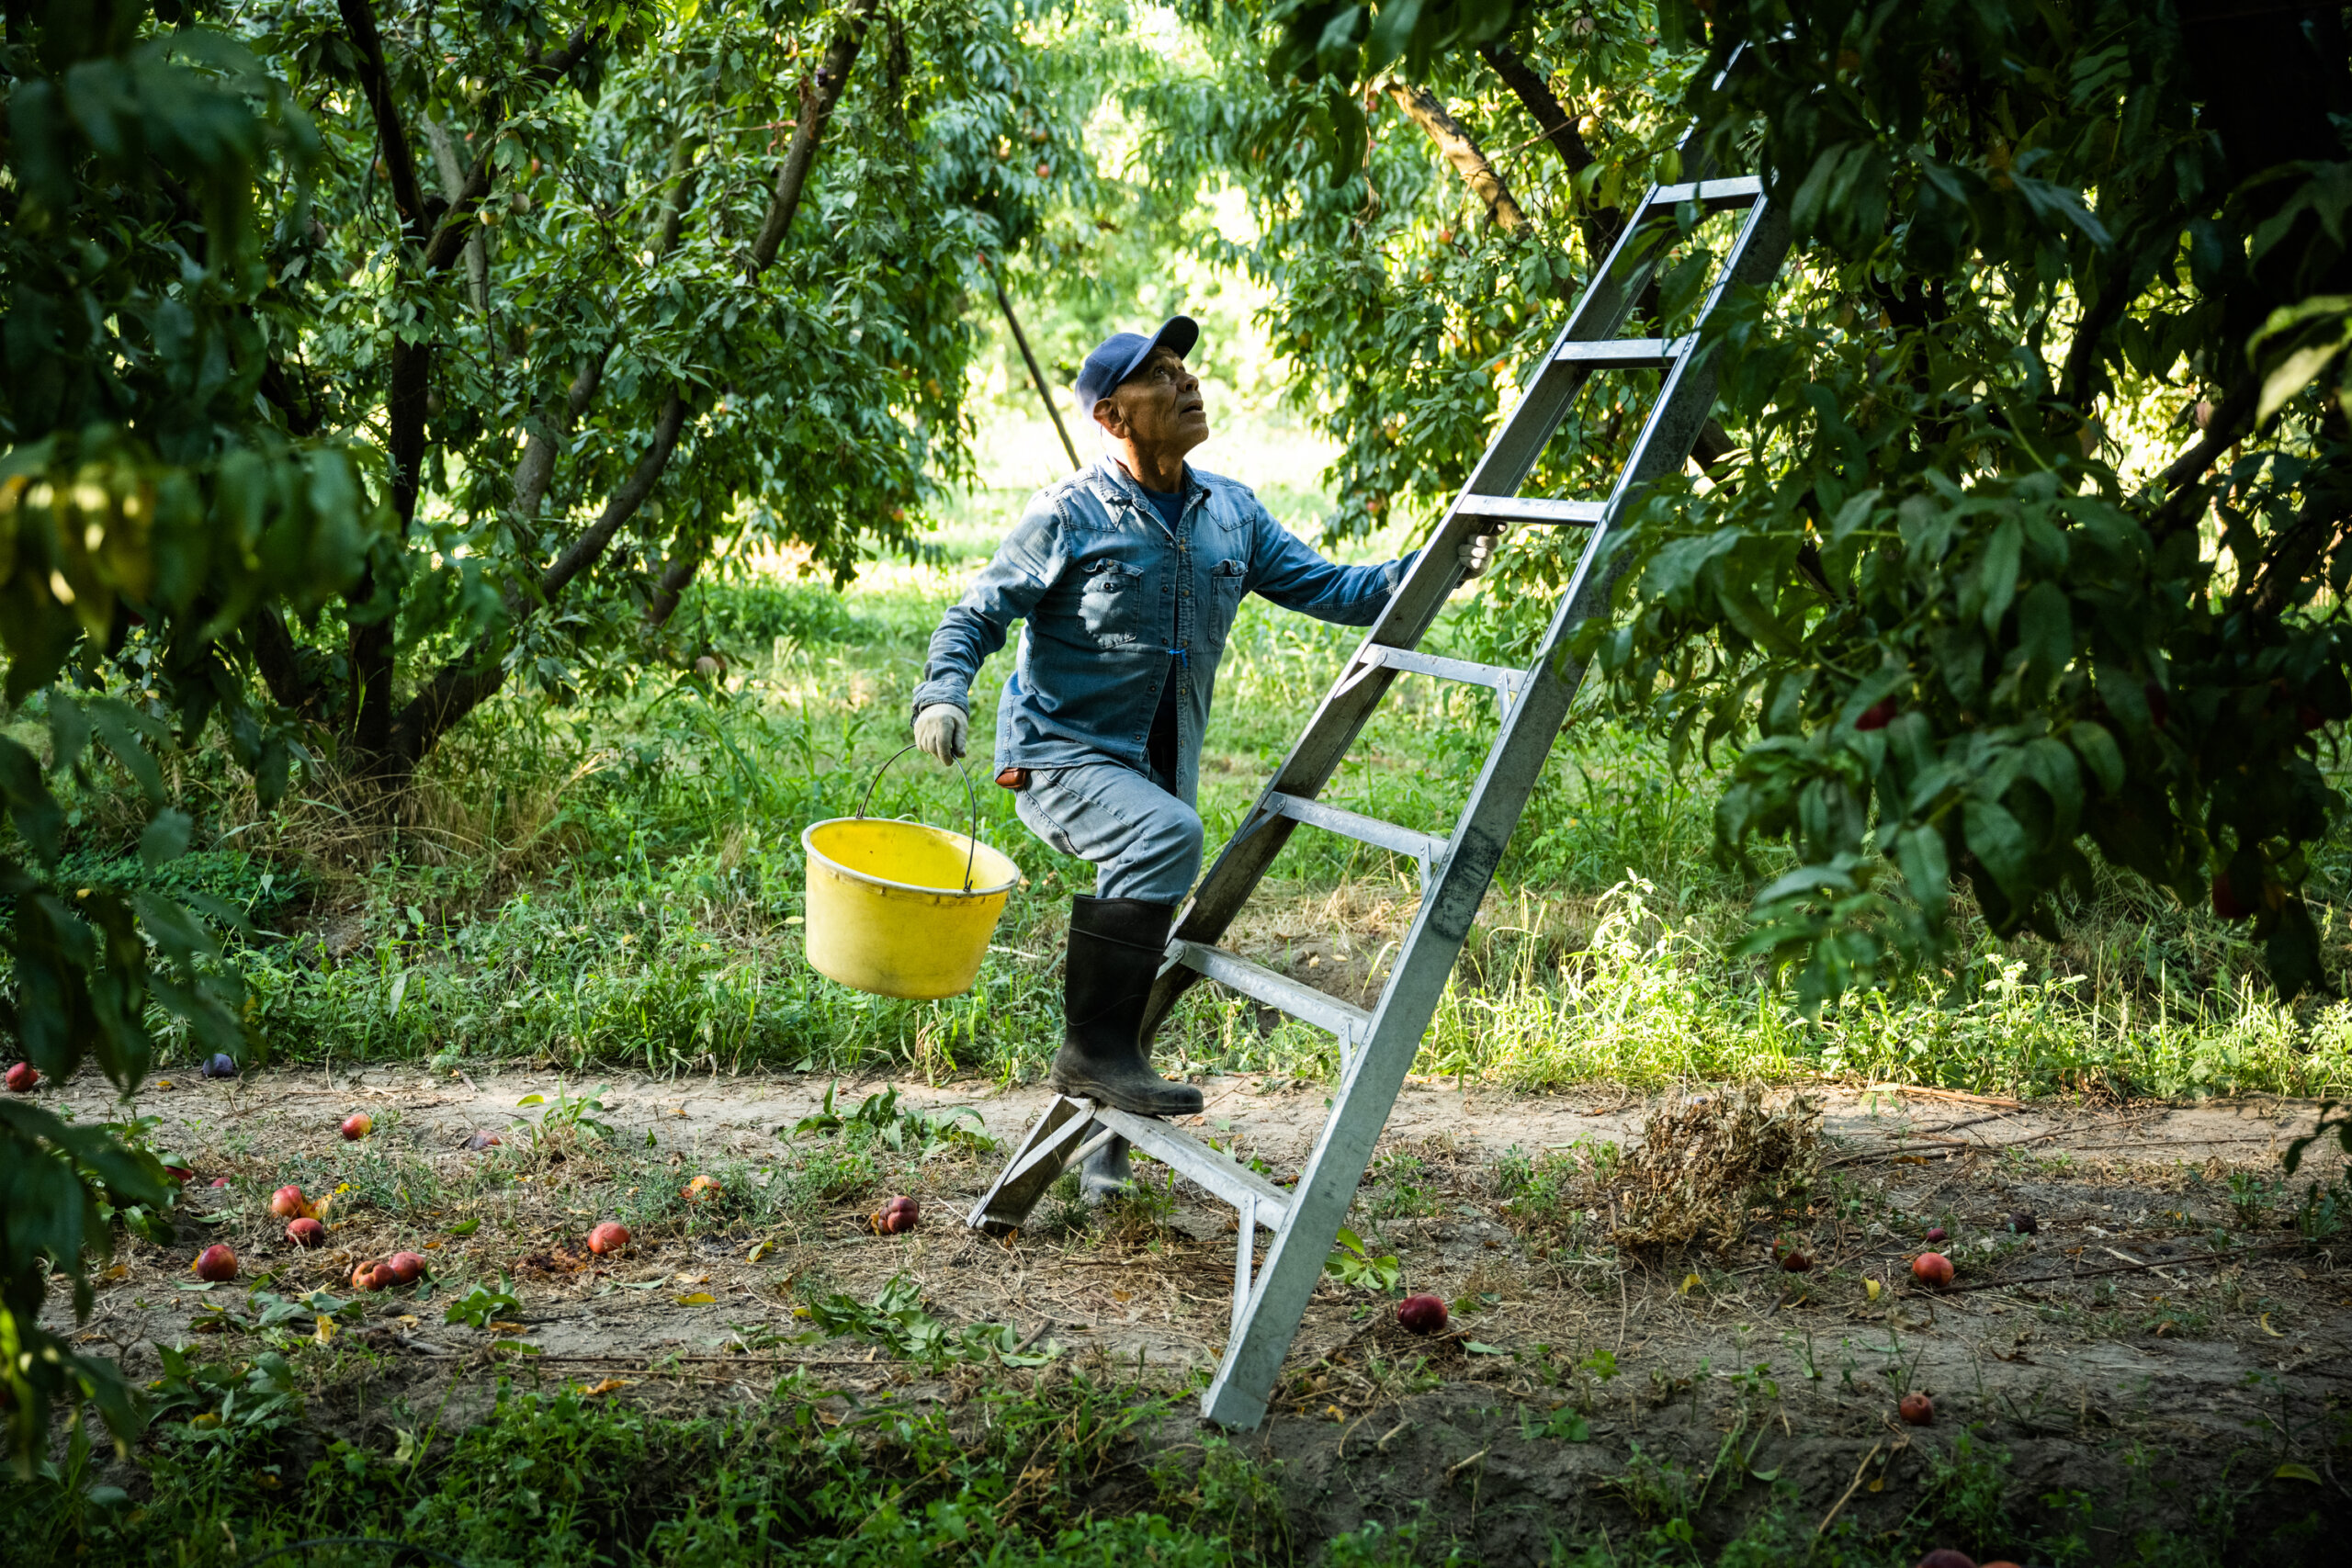 A fieldworker climbs a picking ladder to harvest stone fruit